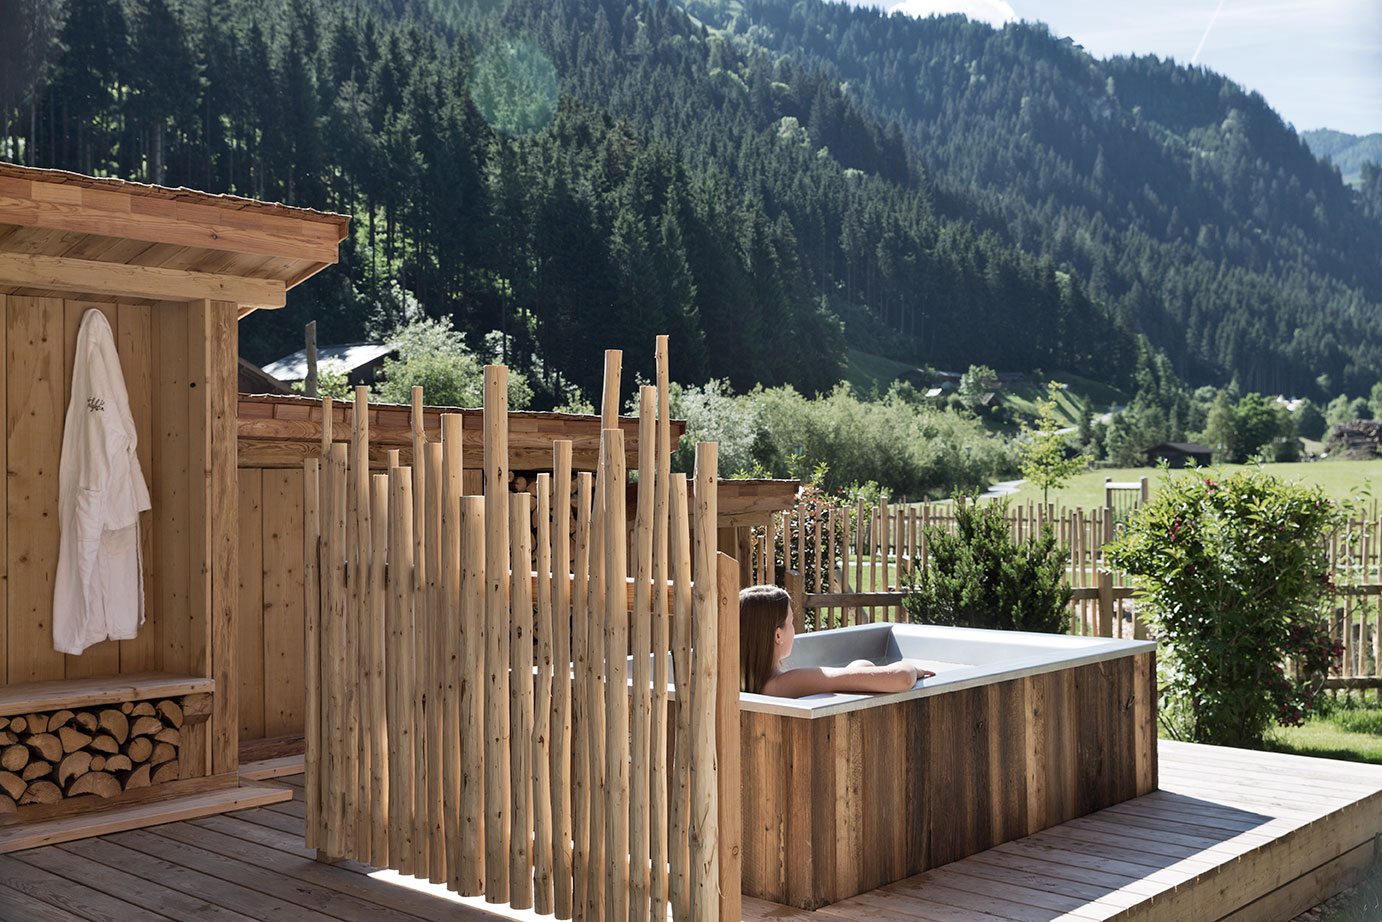 Holzlebn outdoor bathtub